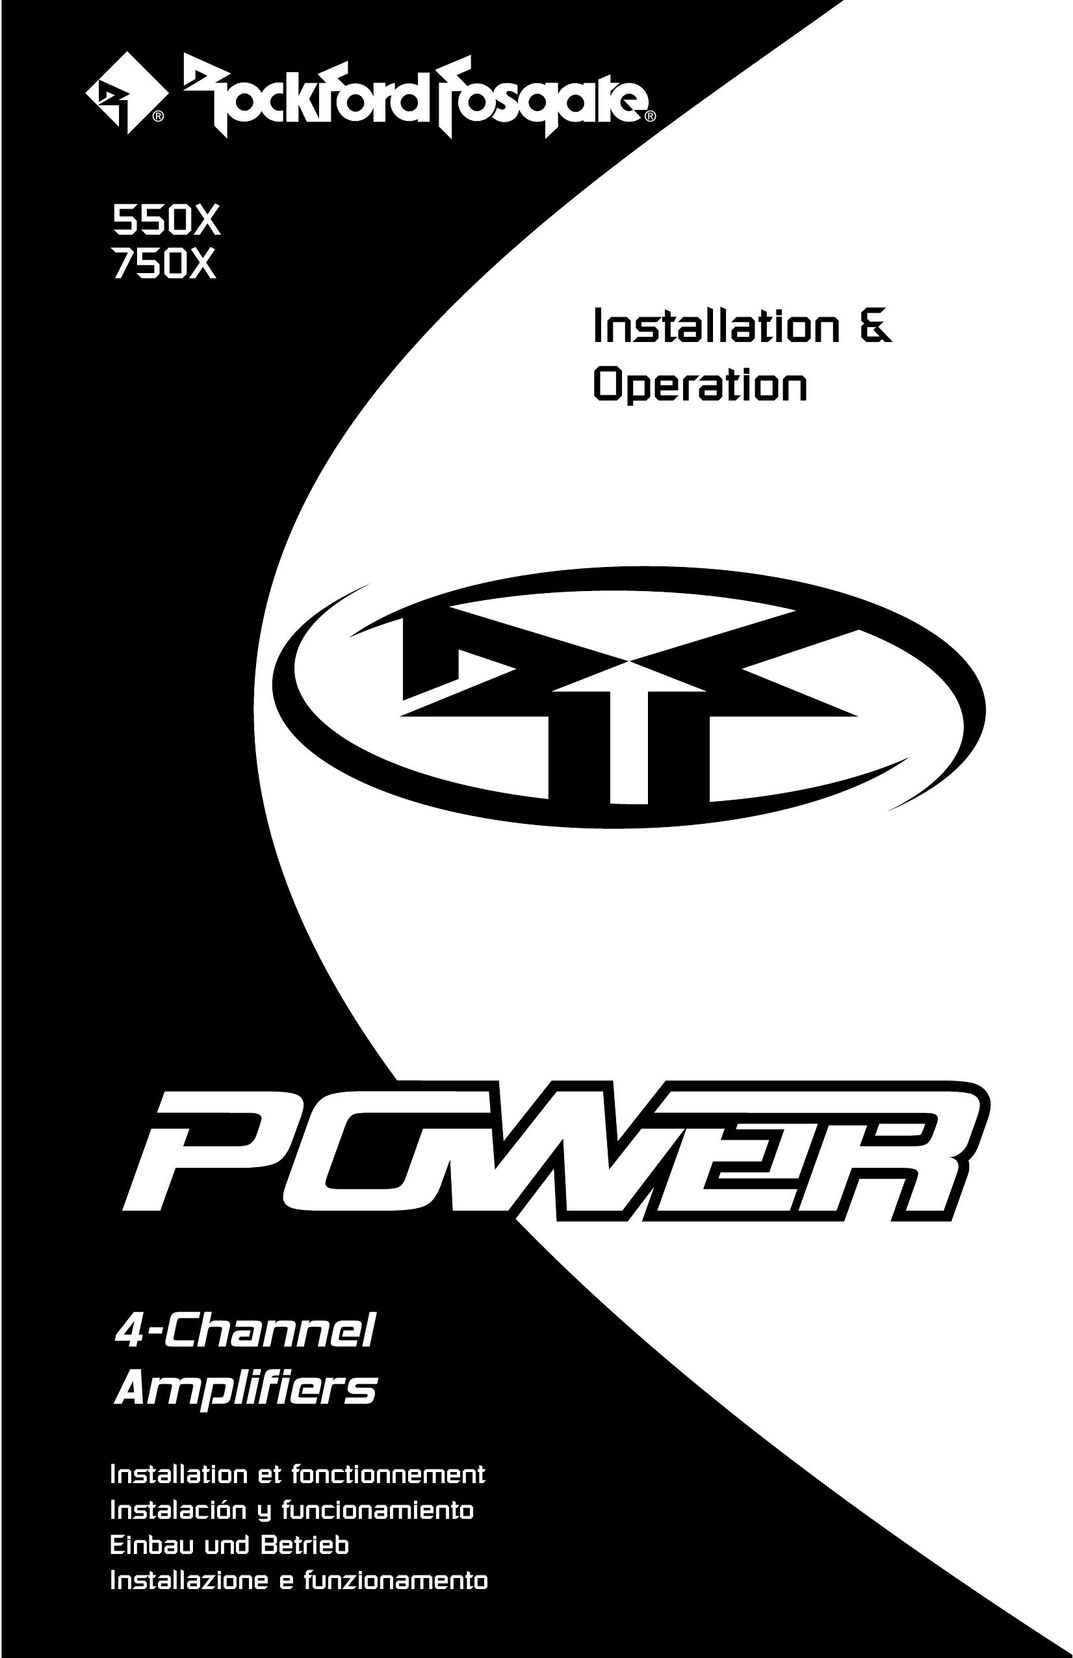 Rockford Fosgate 550X Car Amplifier User Manual